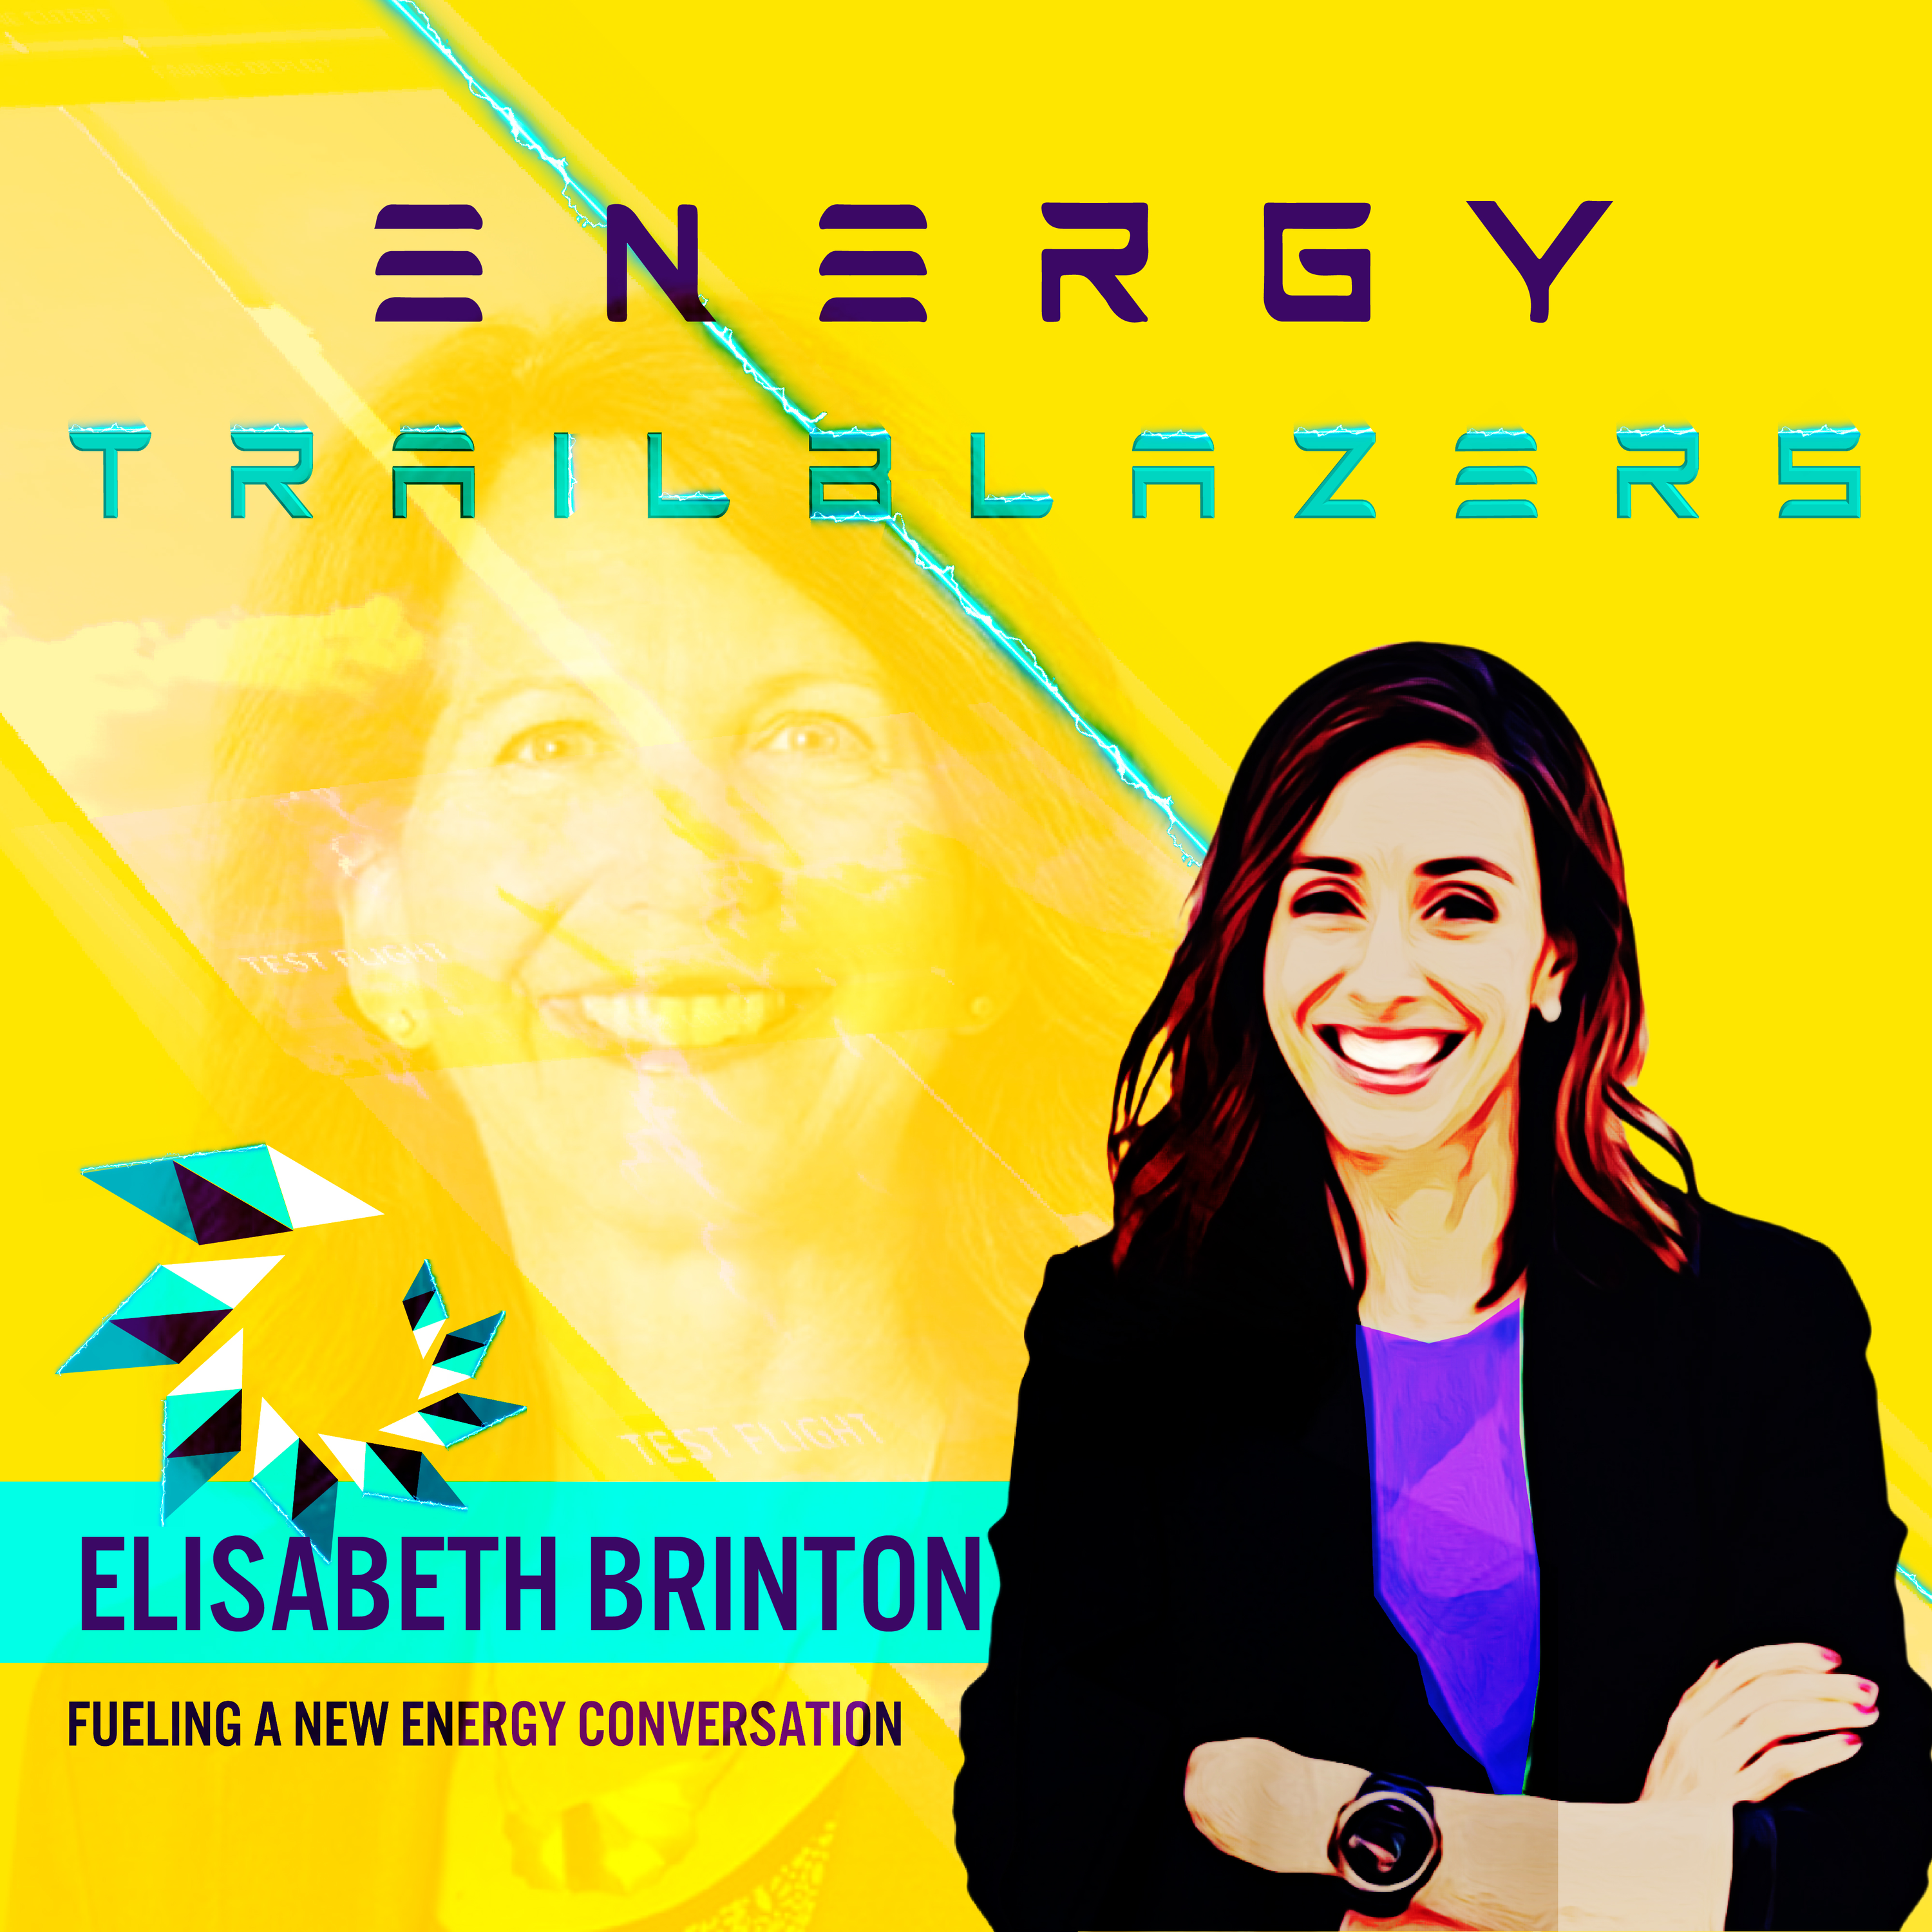 Trailblazer 11 | Elisabeth Brinton | Energy Visionary & Change Agent